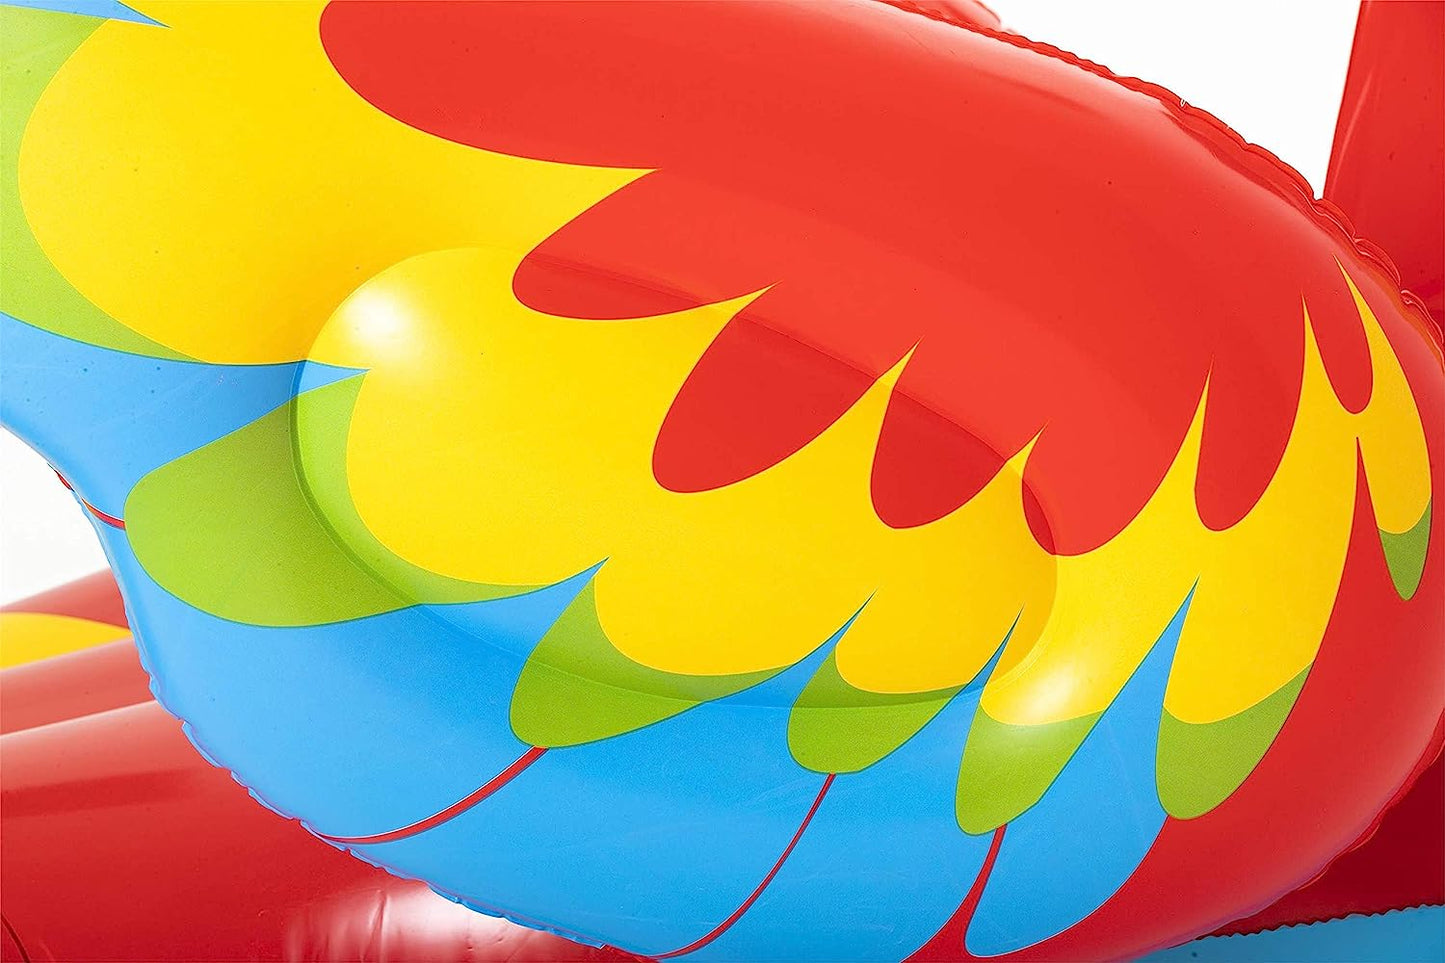 Bestway 2M Inflatable Peppy Parrot Ride-On Pool Float Inflatable Jumbo Float Comfortable Floating Row Summer Outdoor - Homeware Discounts